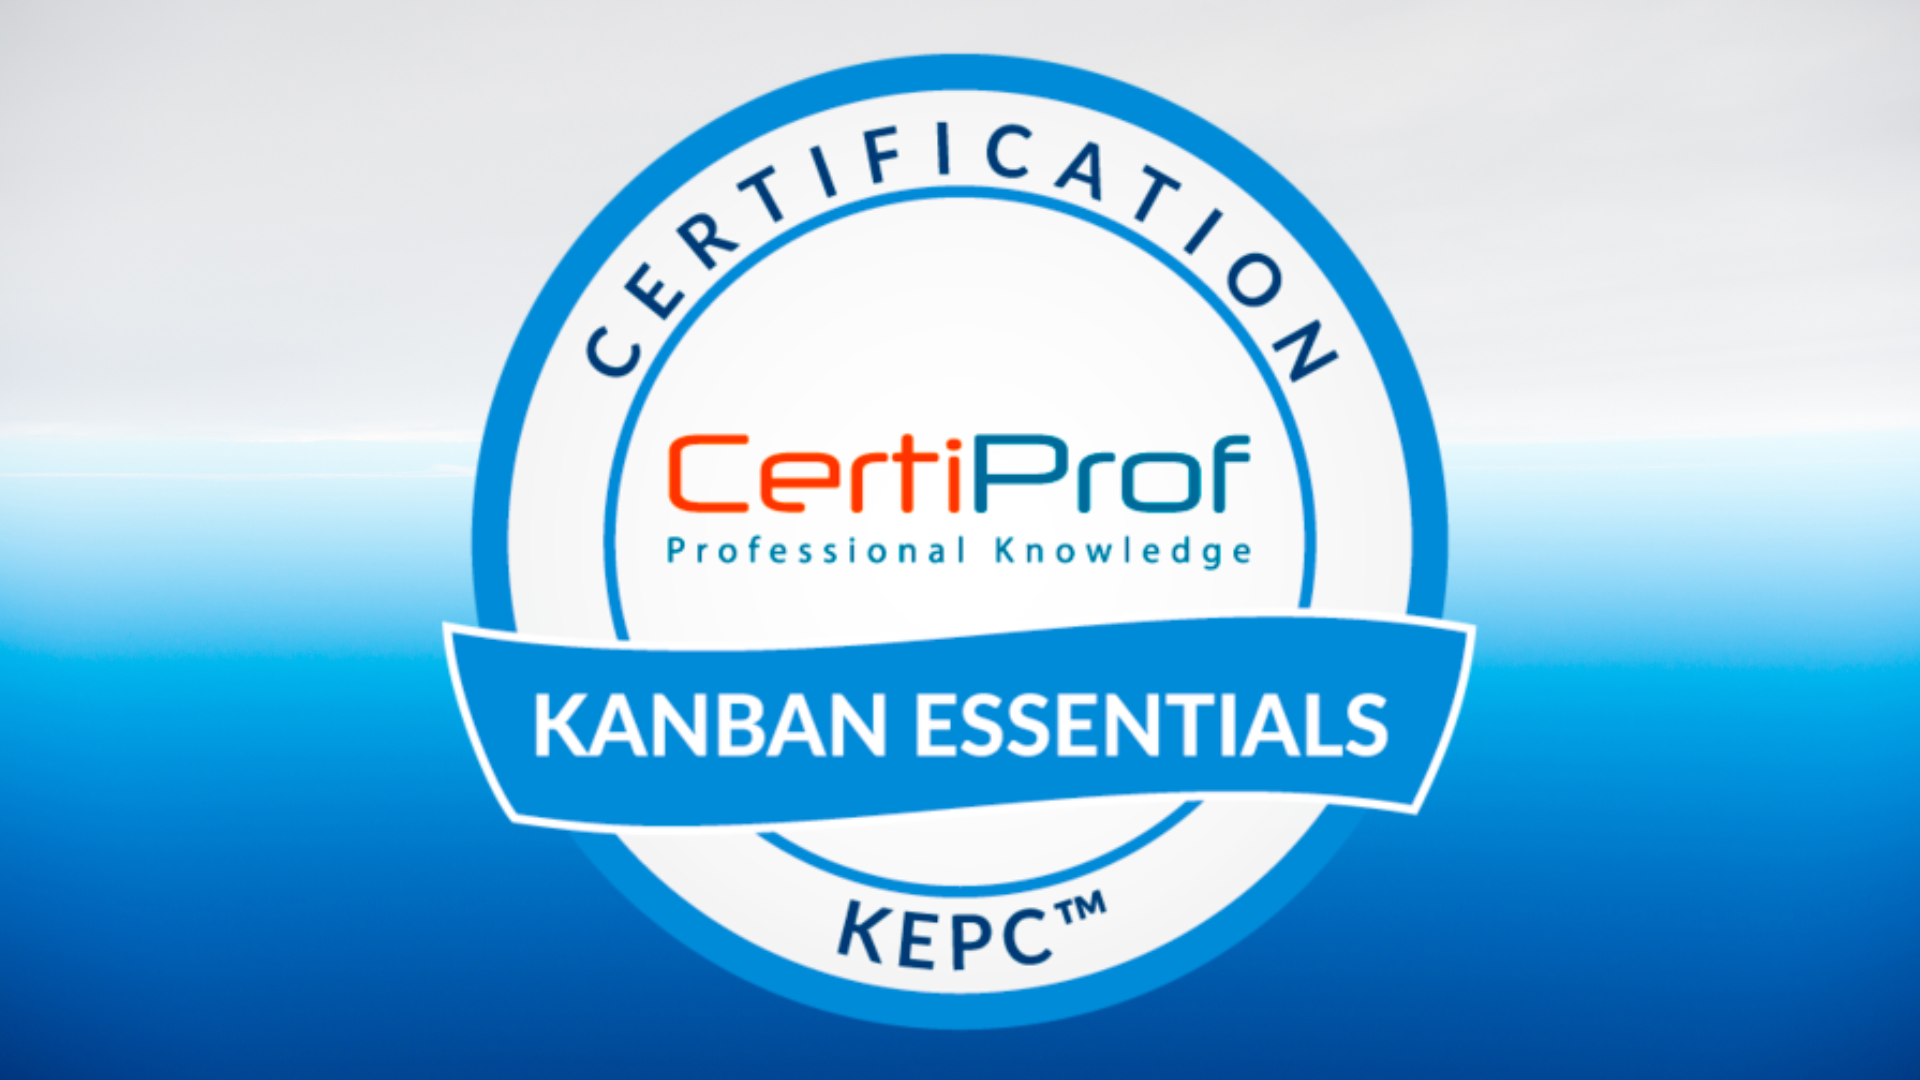 Kanban Essentials Professional Certificate - KEPC™